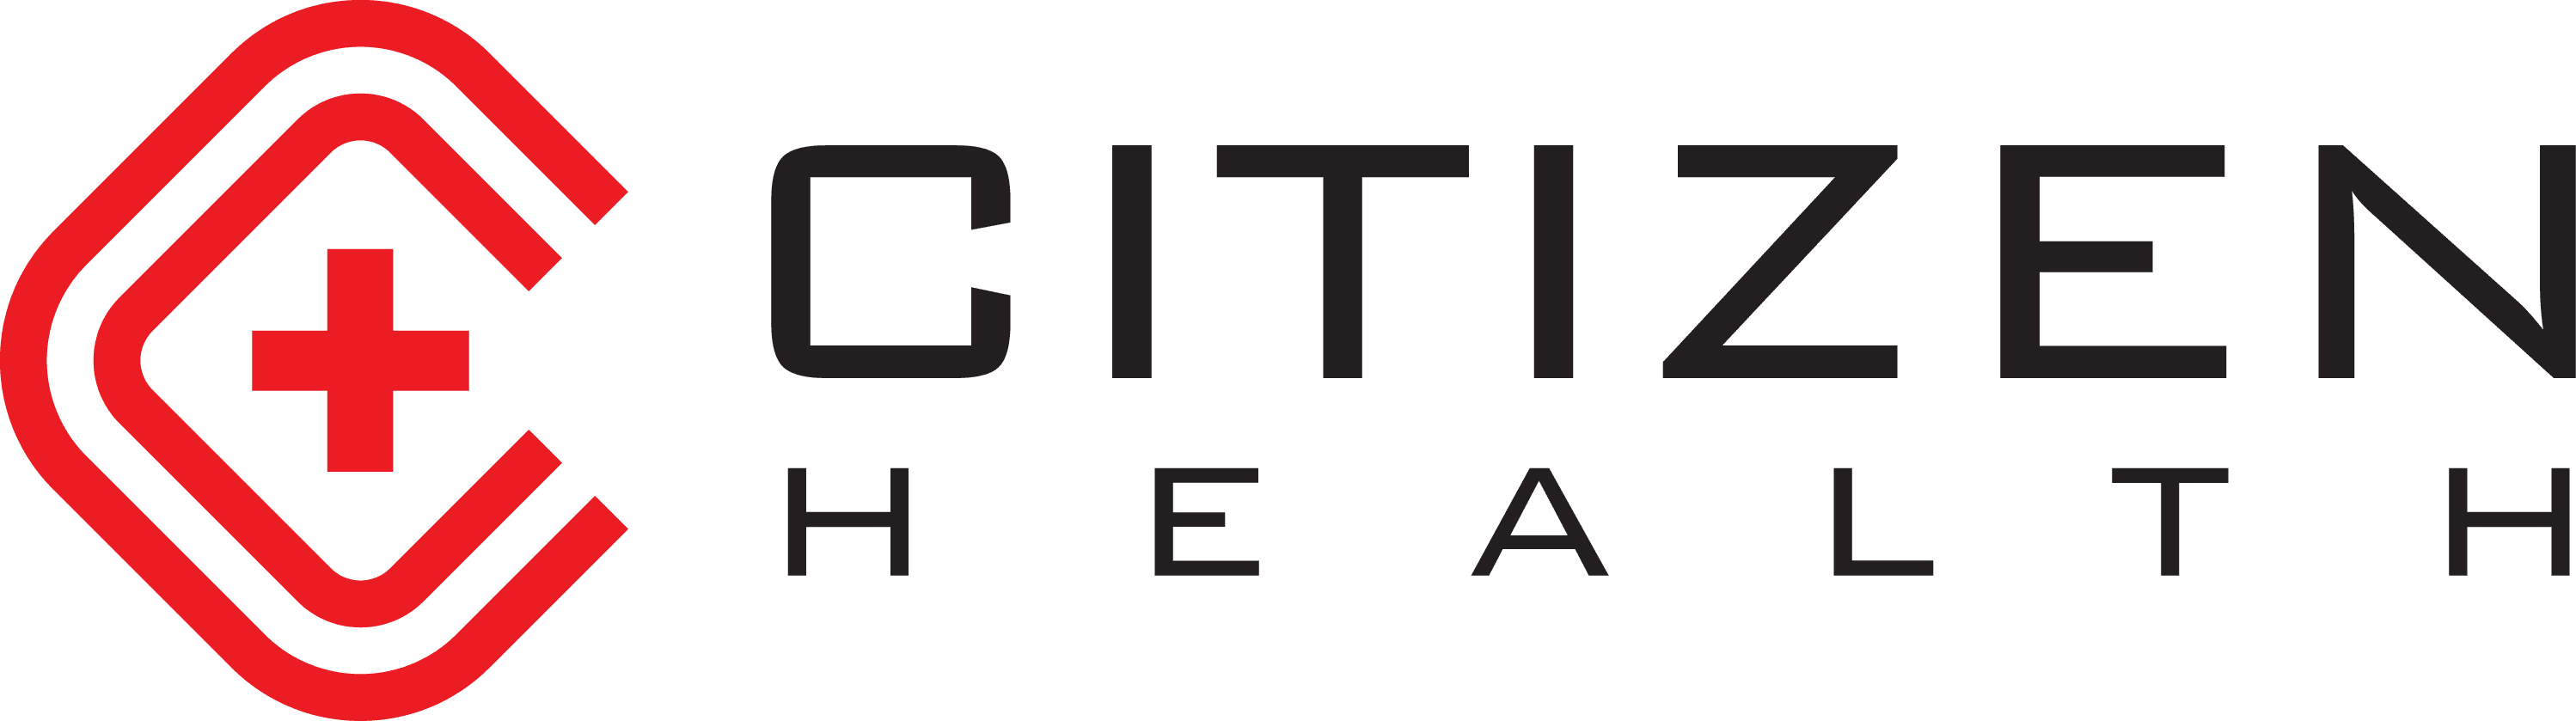 Citizen Health logo - Innovate Mississippi